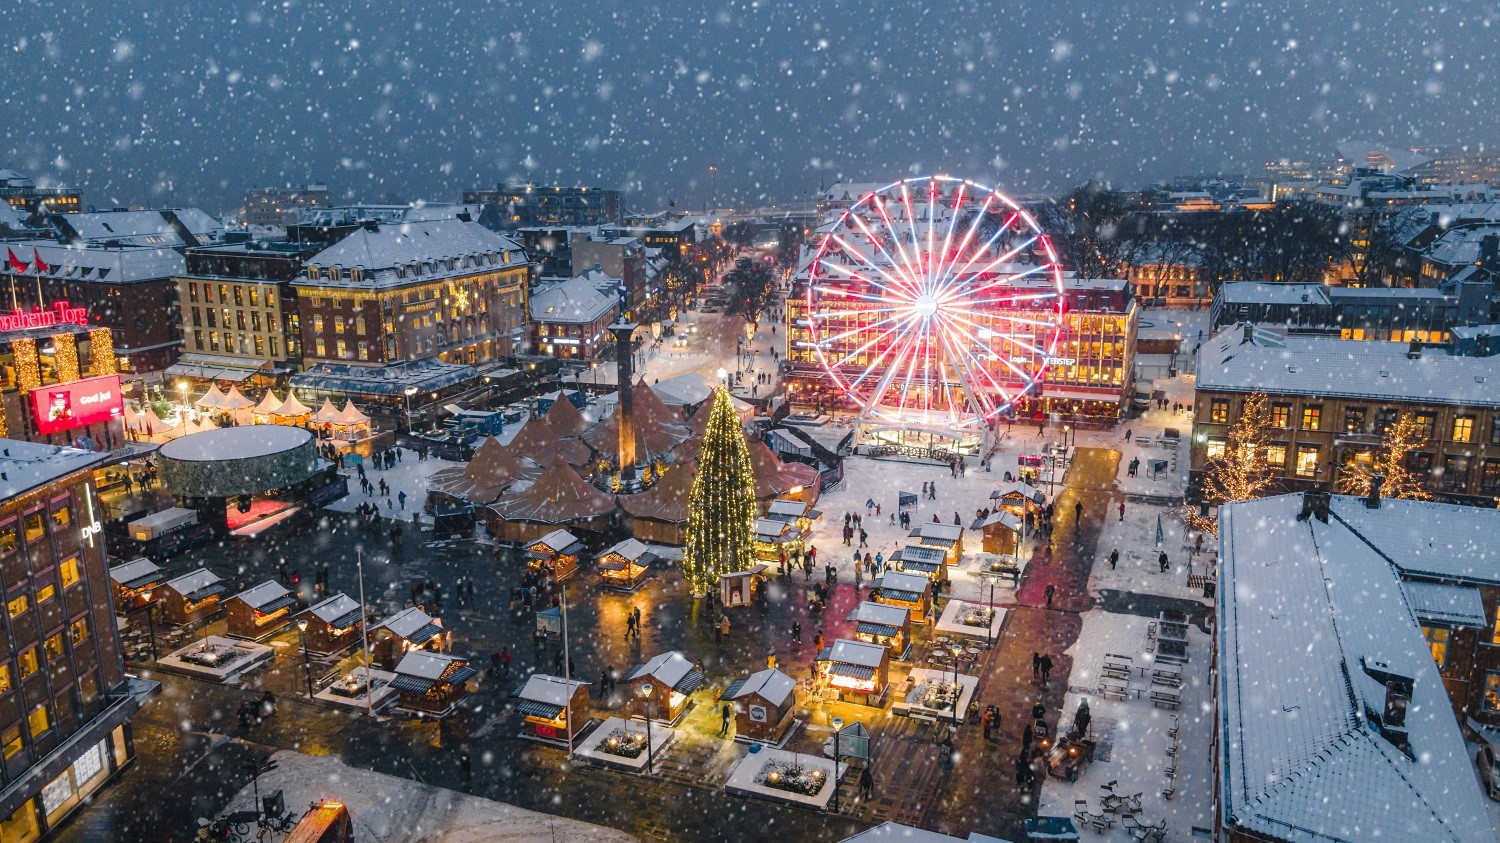 Le marché de Noël de Trondheim et sa grande roue gigantesque